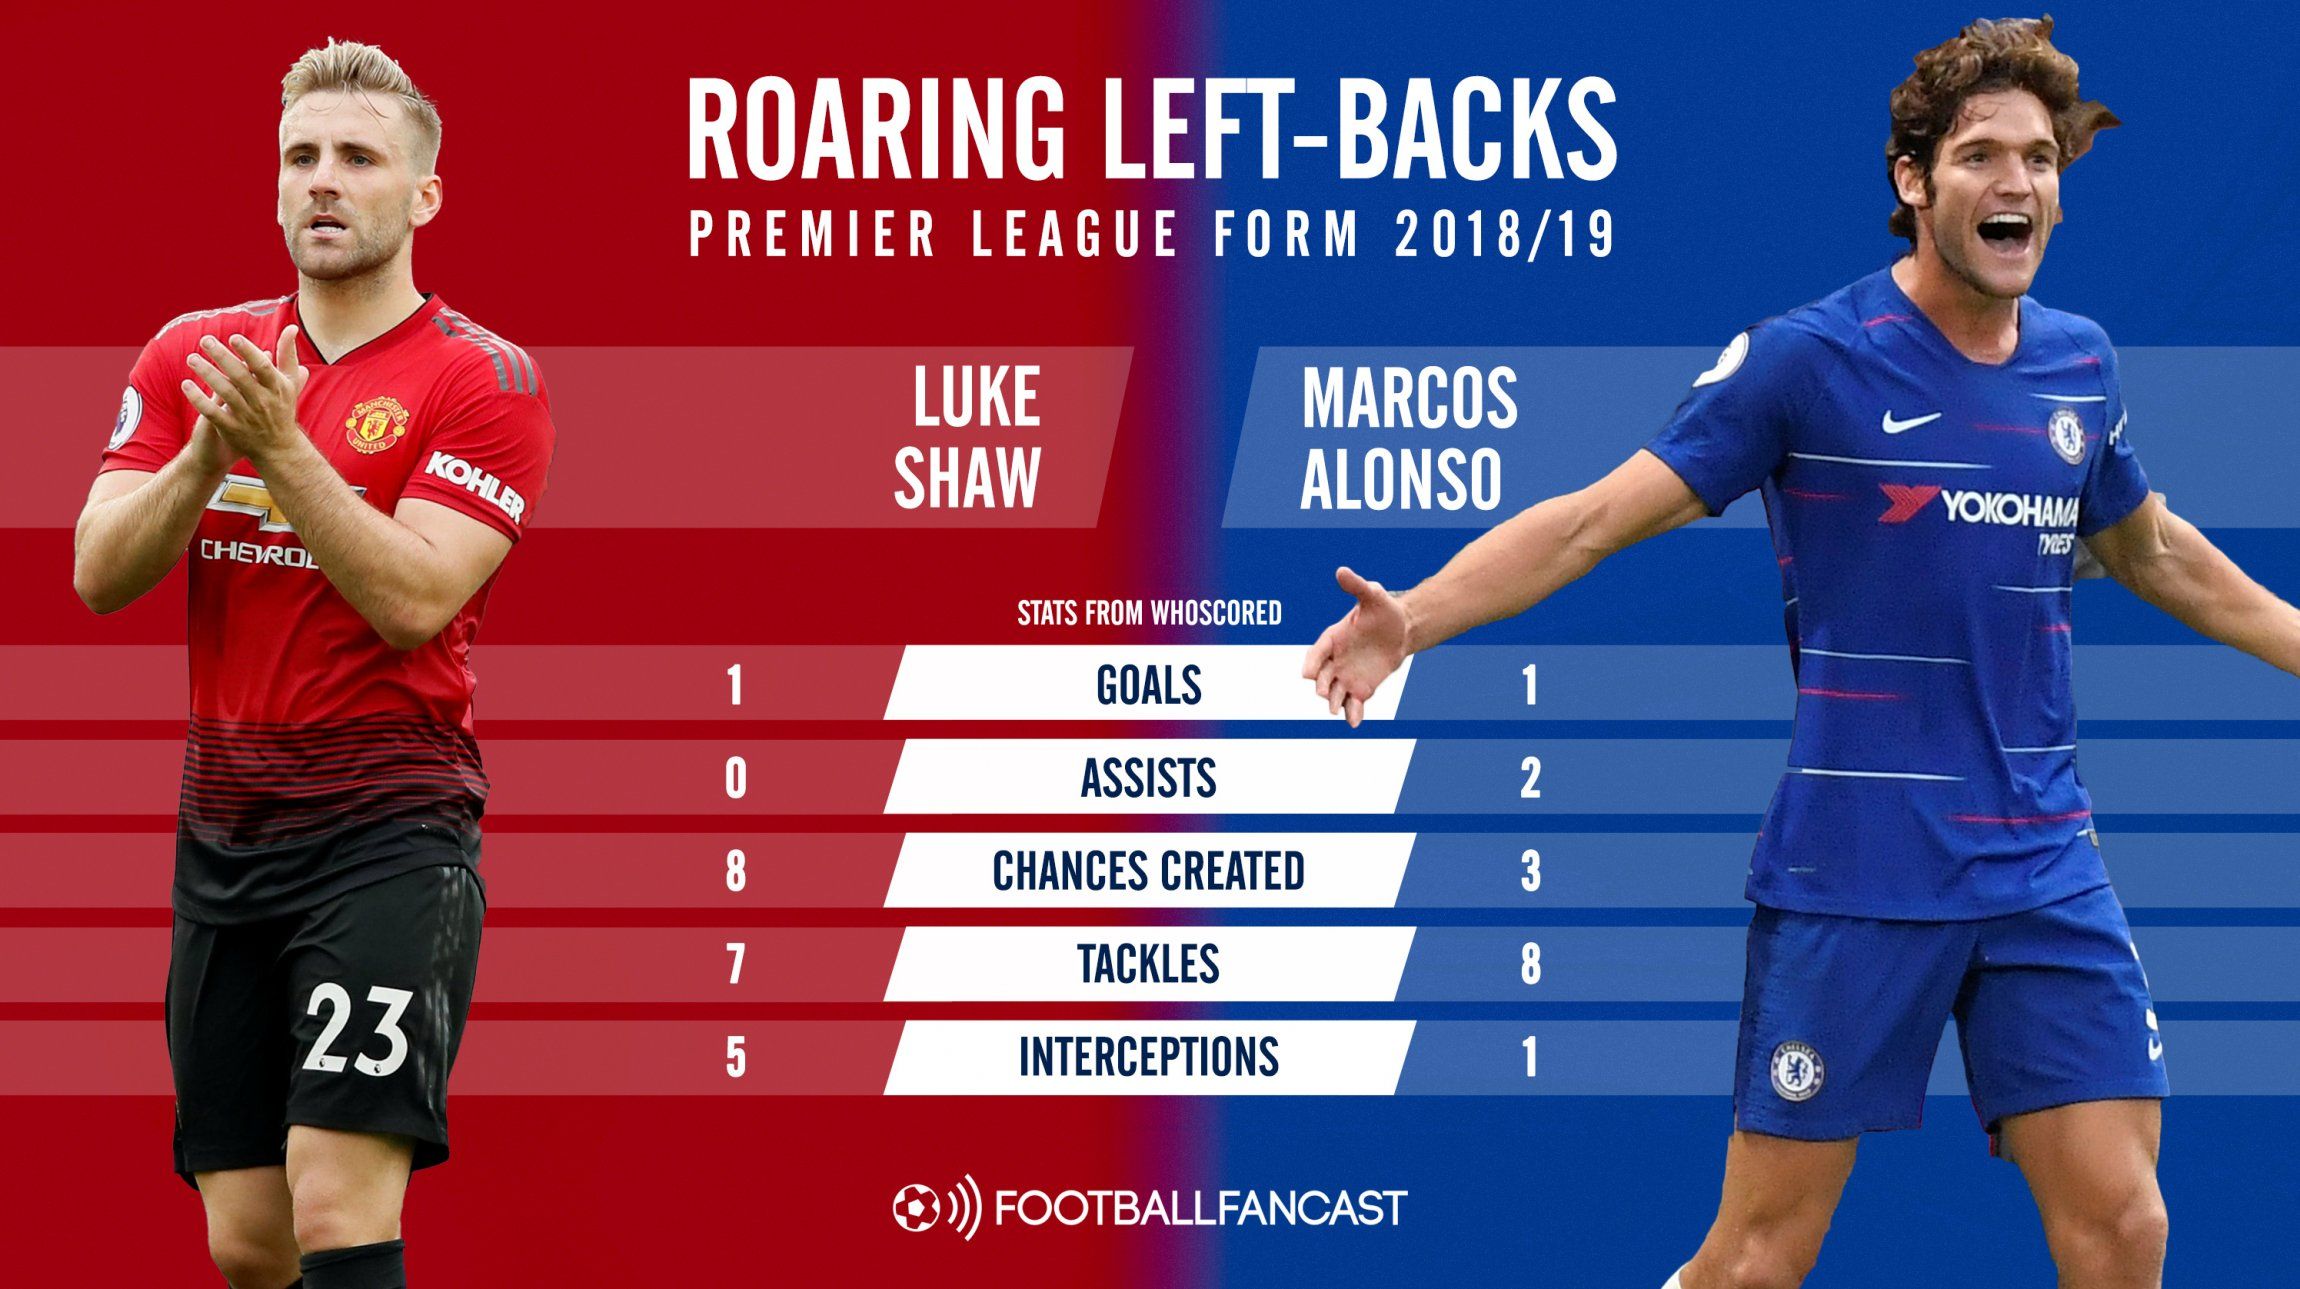 Luke Shaw vs Marcos Alonso - Premier League form